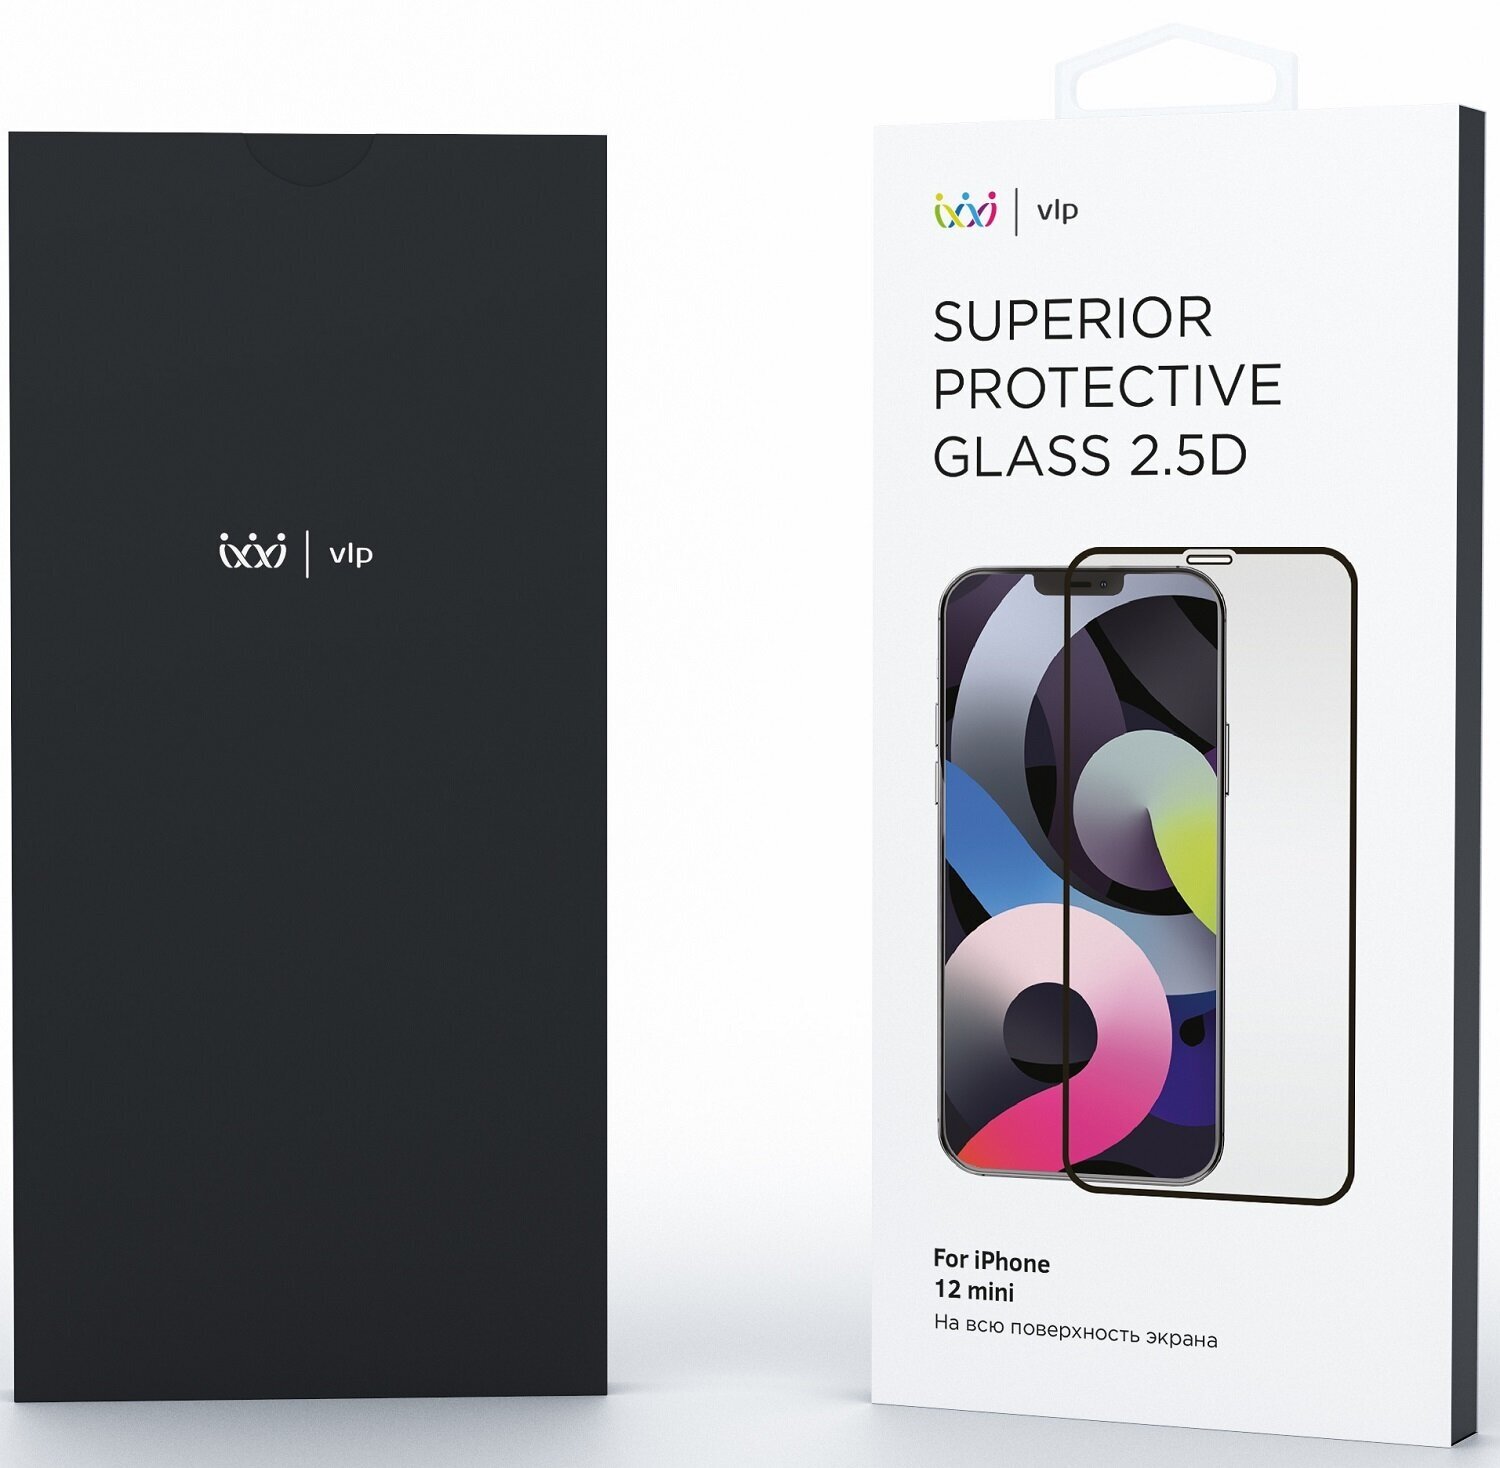 Защитное стекло для экрана VLP для Apple iPhone 12 mini, 64 х 131 мм, прозрачная, 1 шт, черный [vlp-25dgl20-54bk] Noname - фото №6